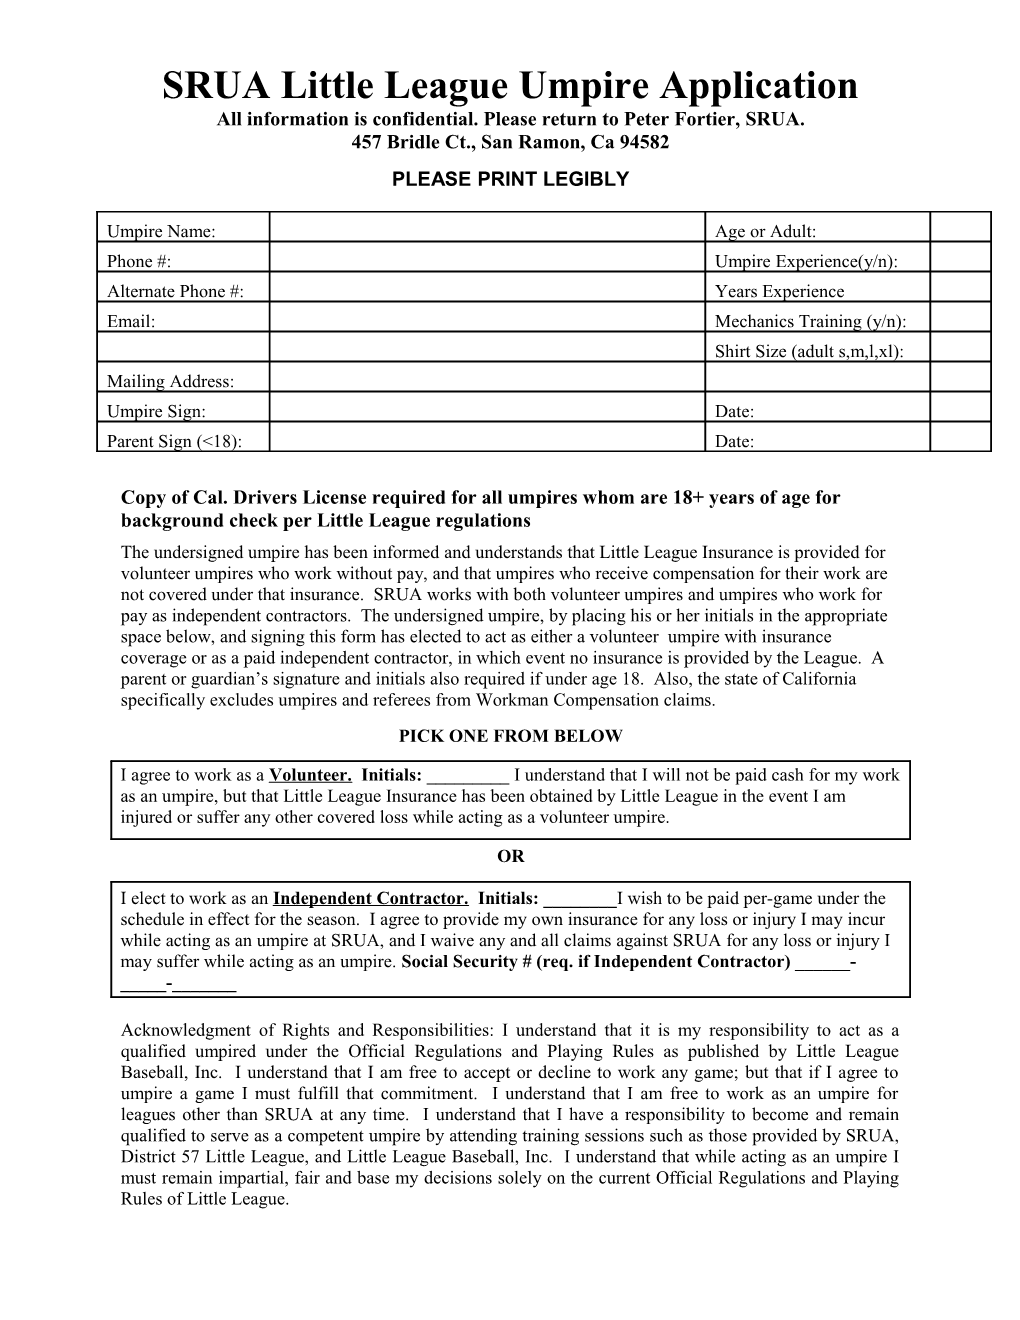 SRUA Little League Umpire Application